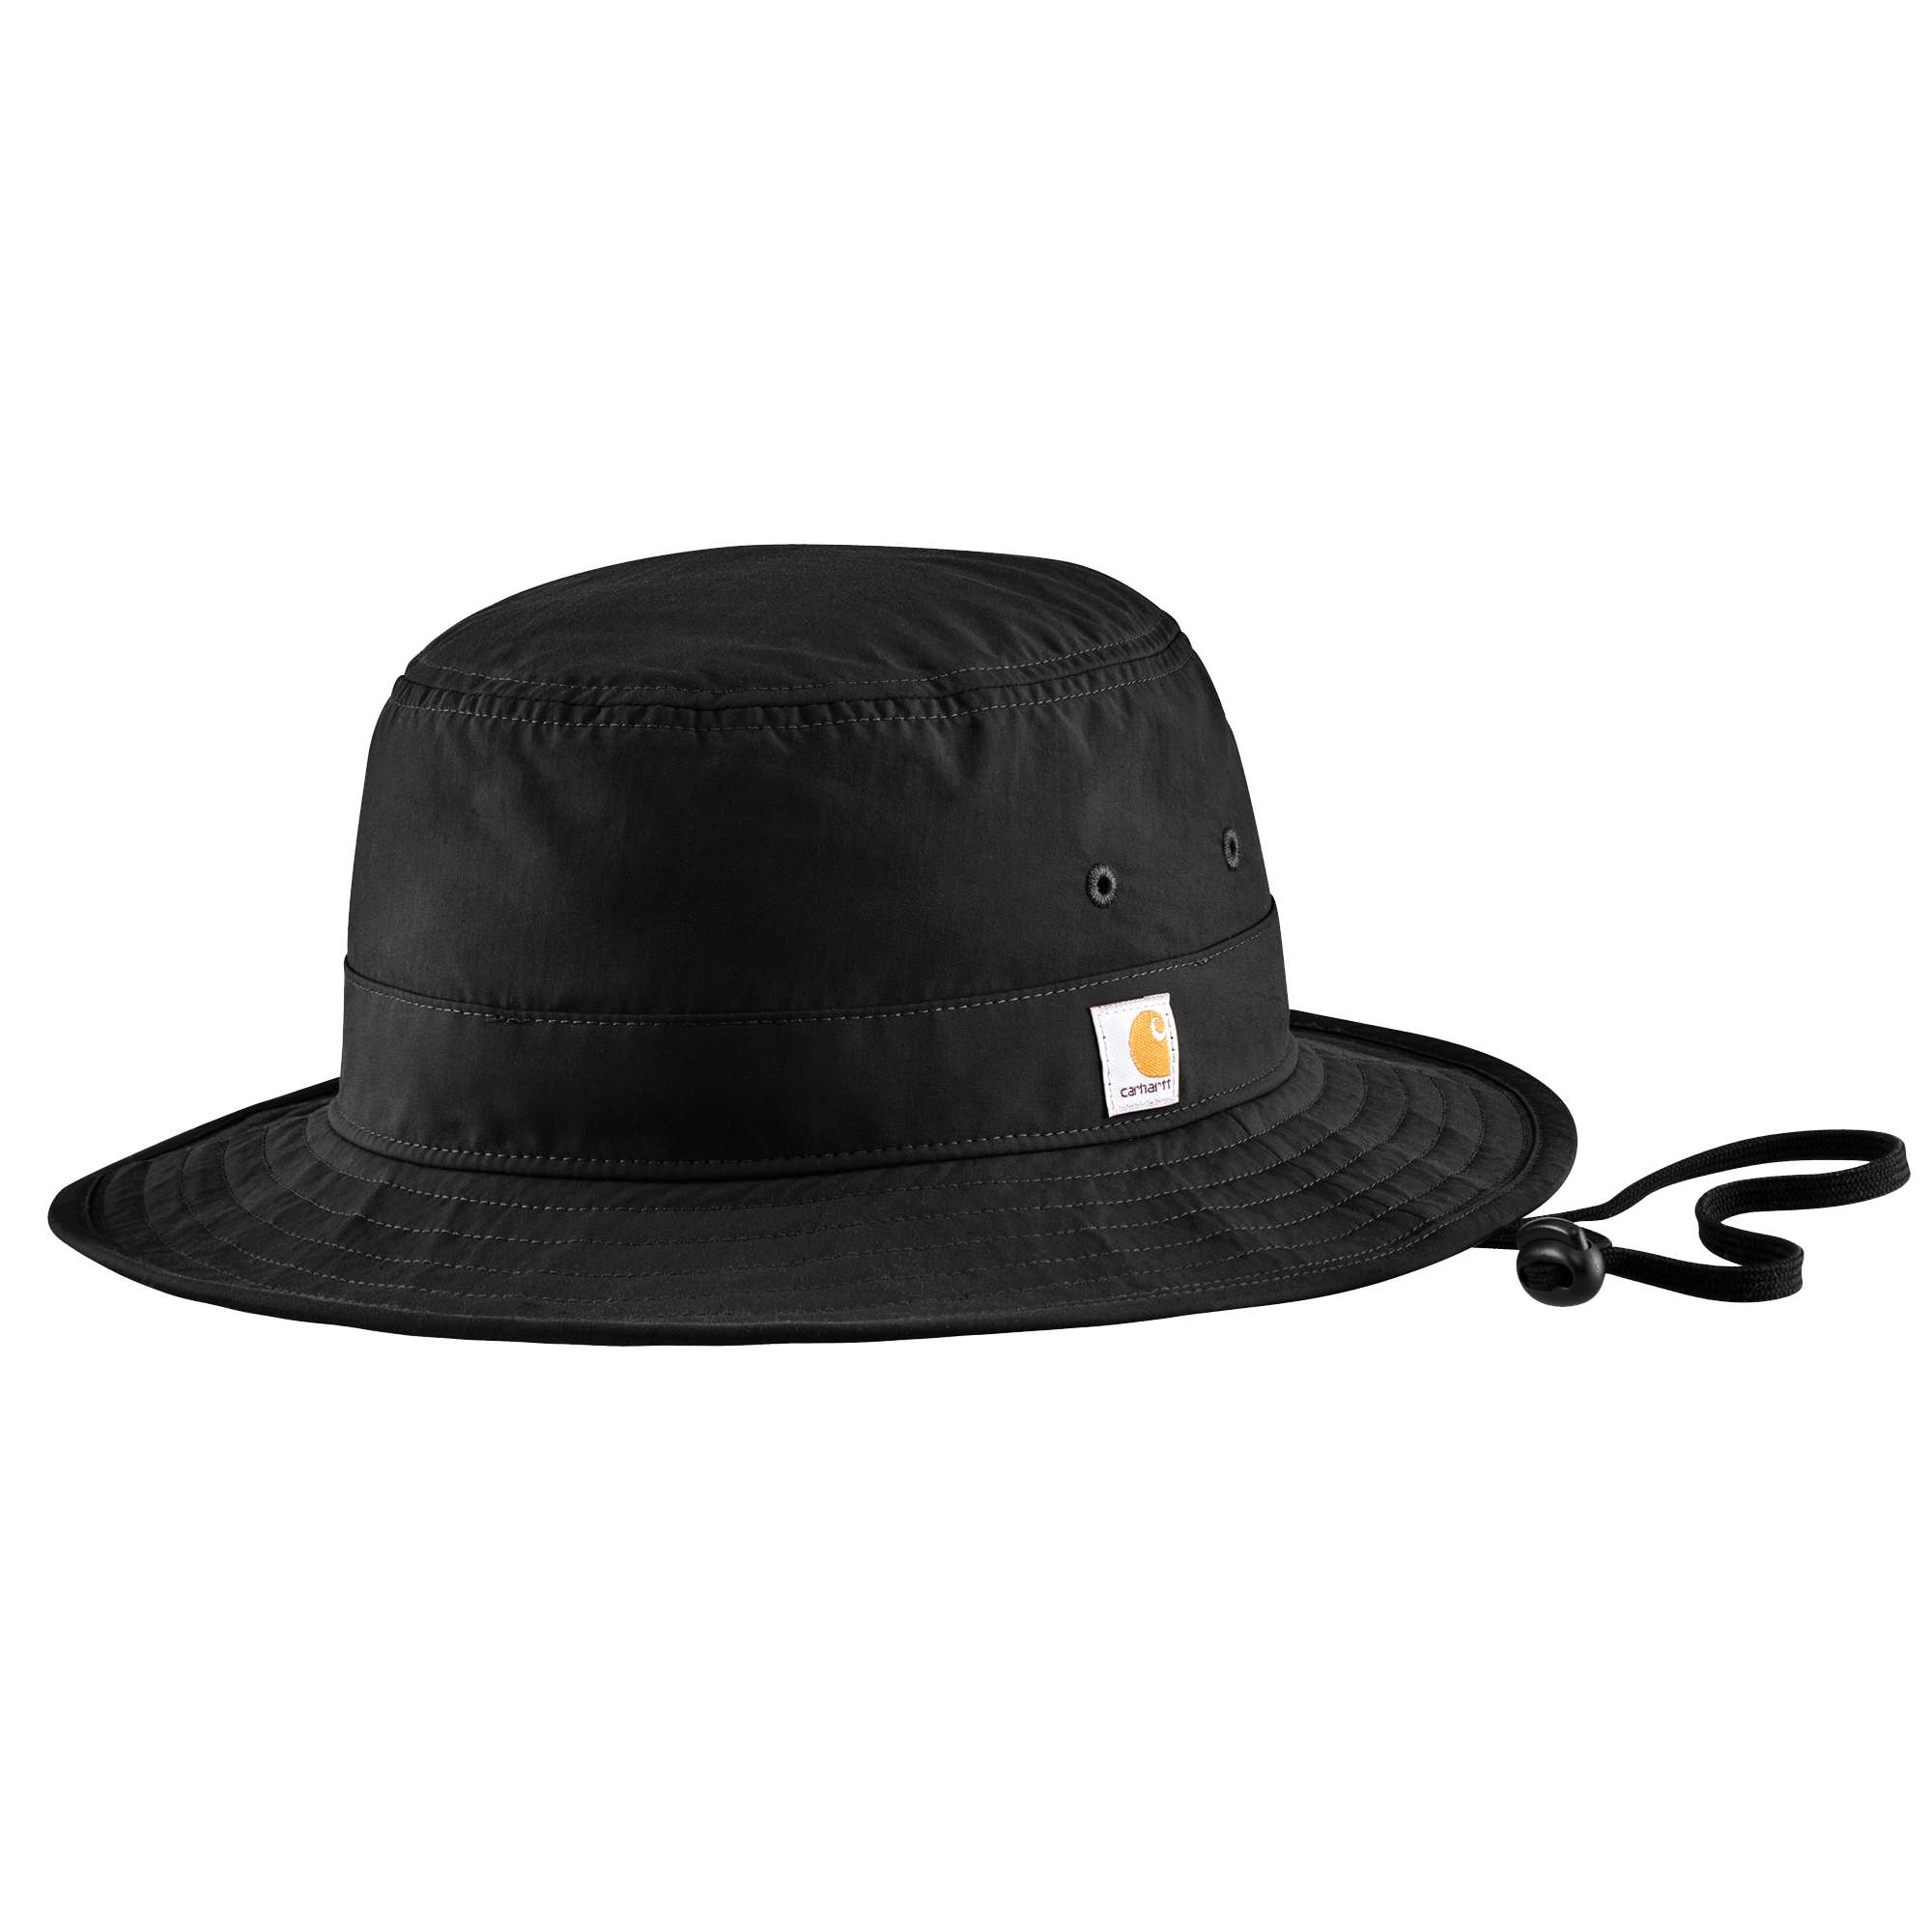 Unisex Fishing Bucket Hat, Black - Short Hair - Light Brown Color, 4  Seasons